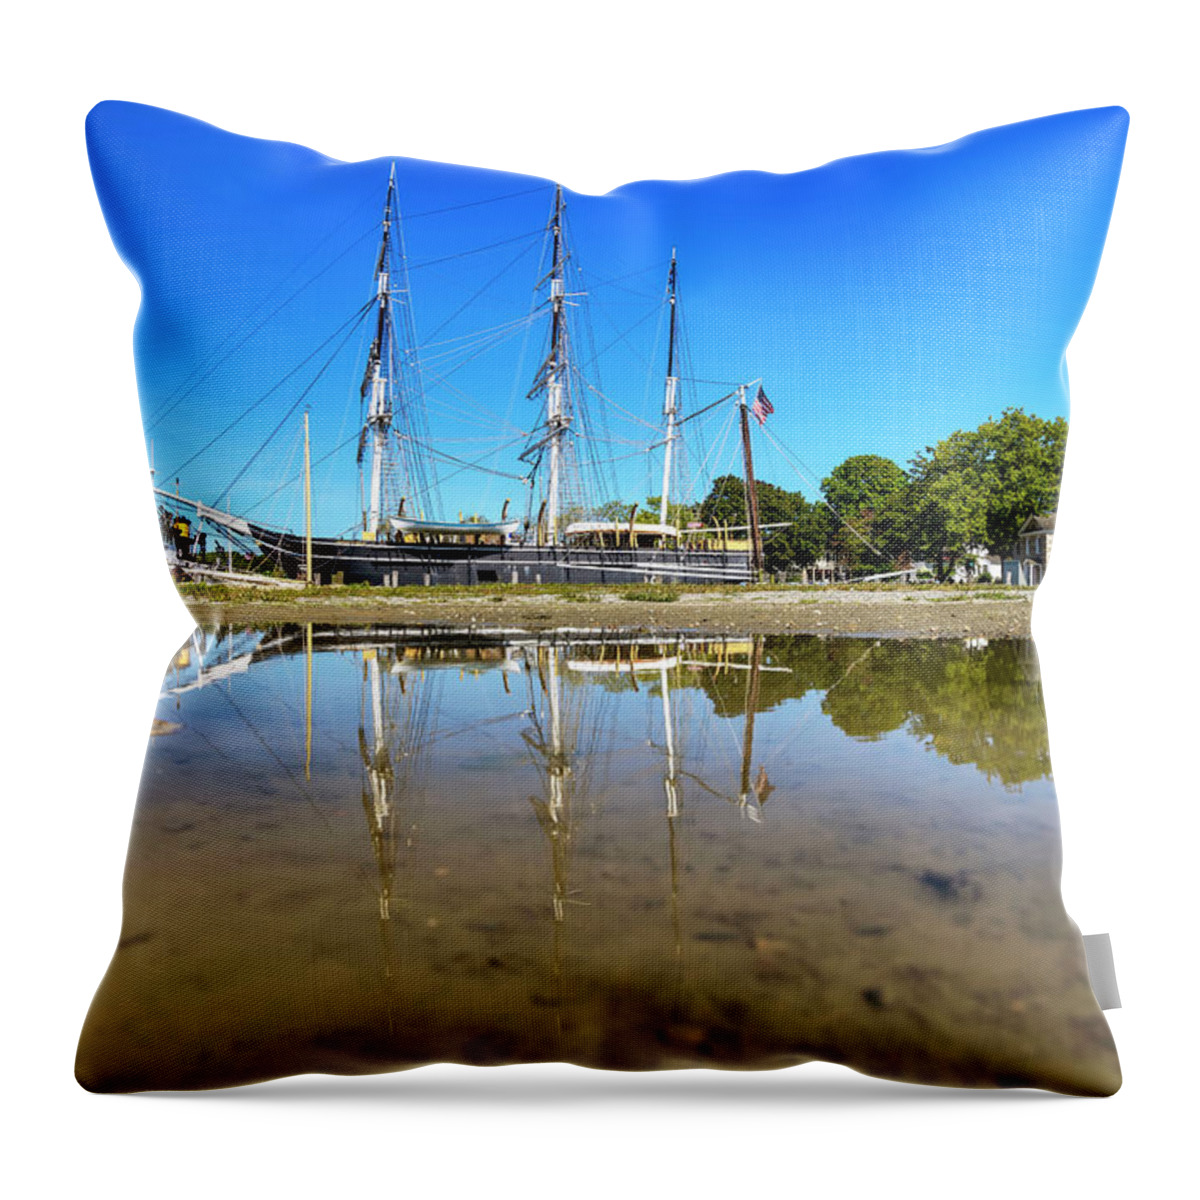 Estock Throw Pillow featuring the digital art Connecticut, Mystic Seaport Museum, Open Air Museum. by Claudia Uripos